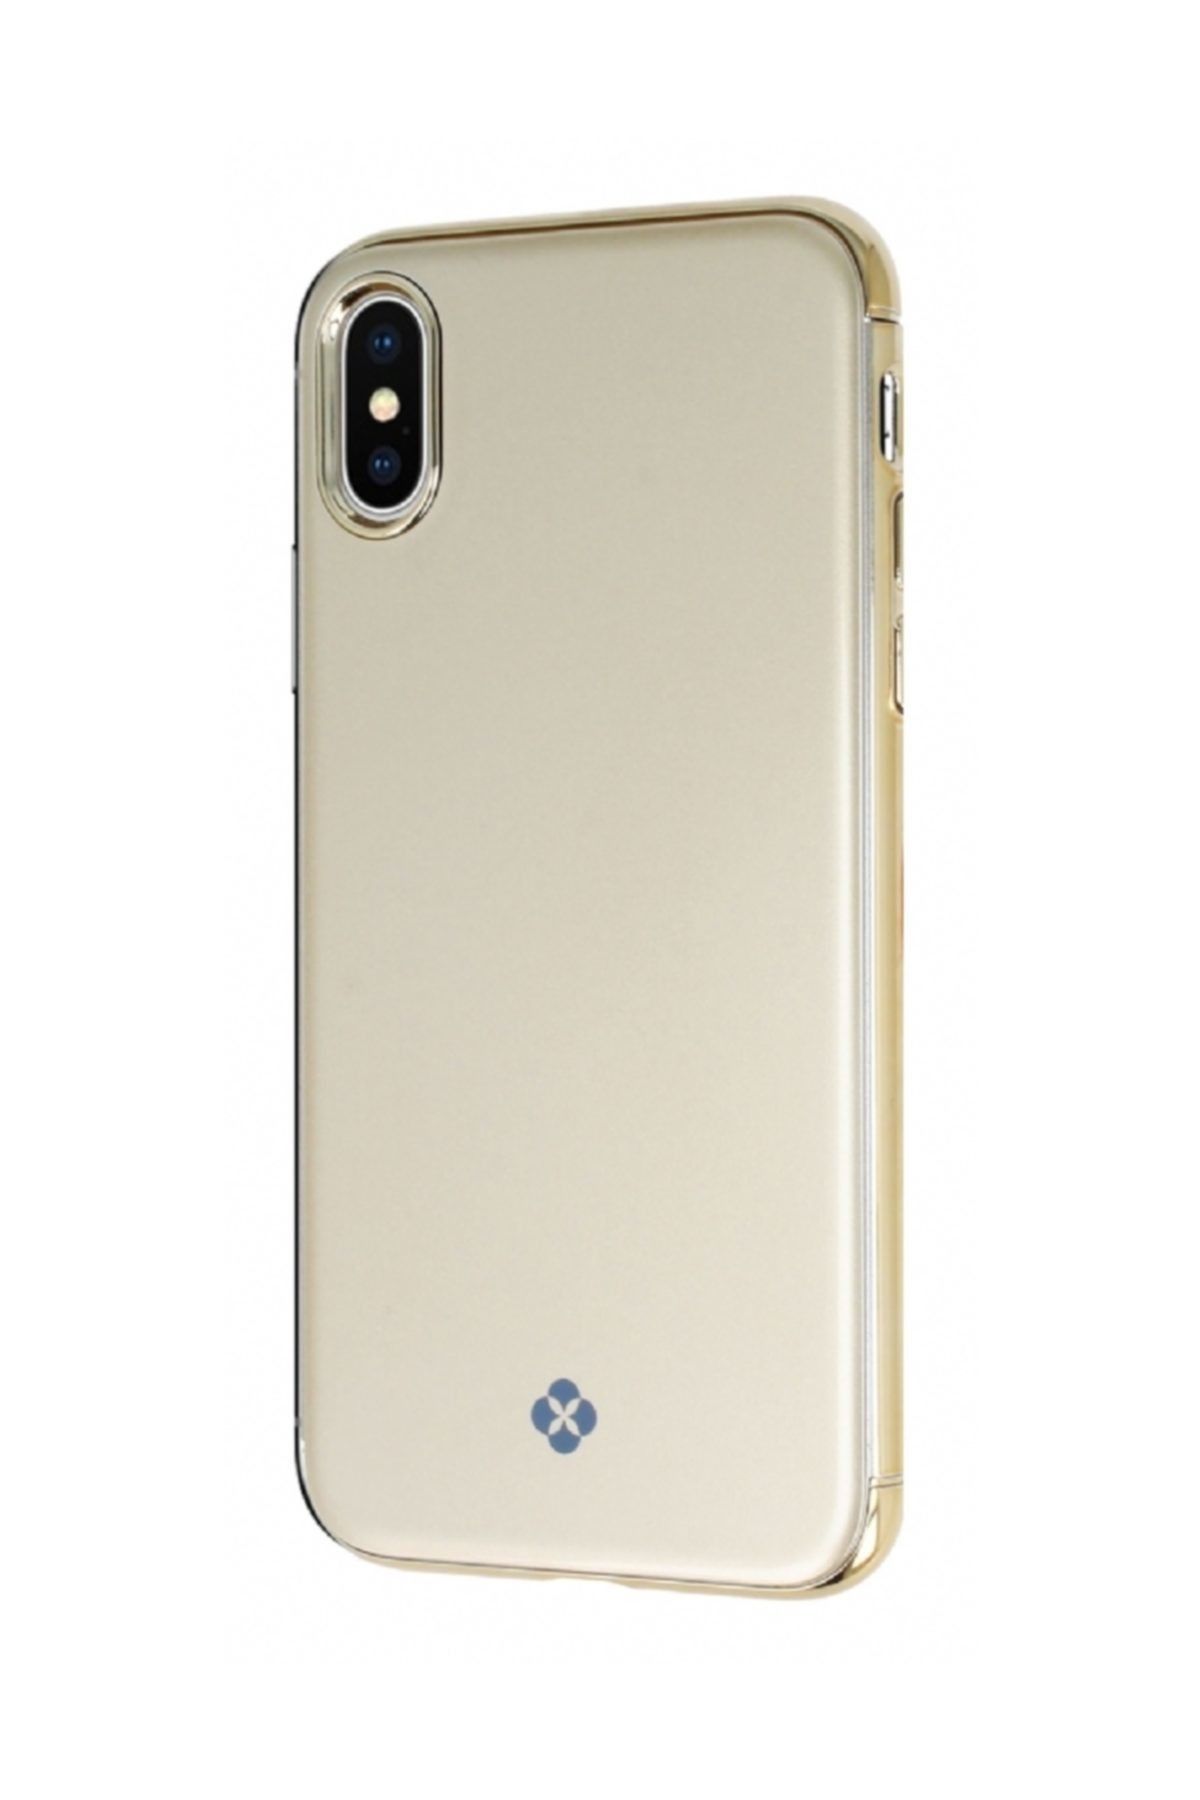 Totu Design Furios iPhone X 3ü 1 Arada Gold Rubber Kılıf